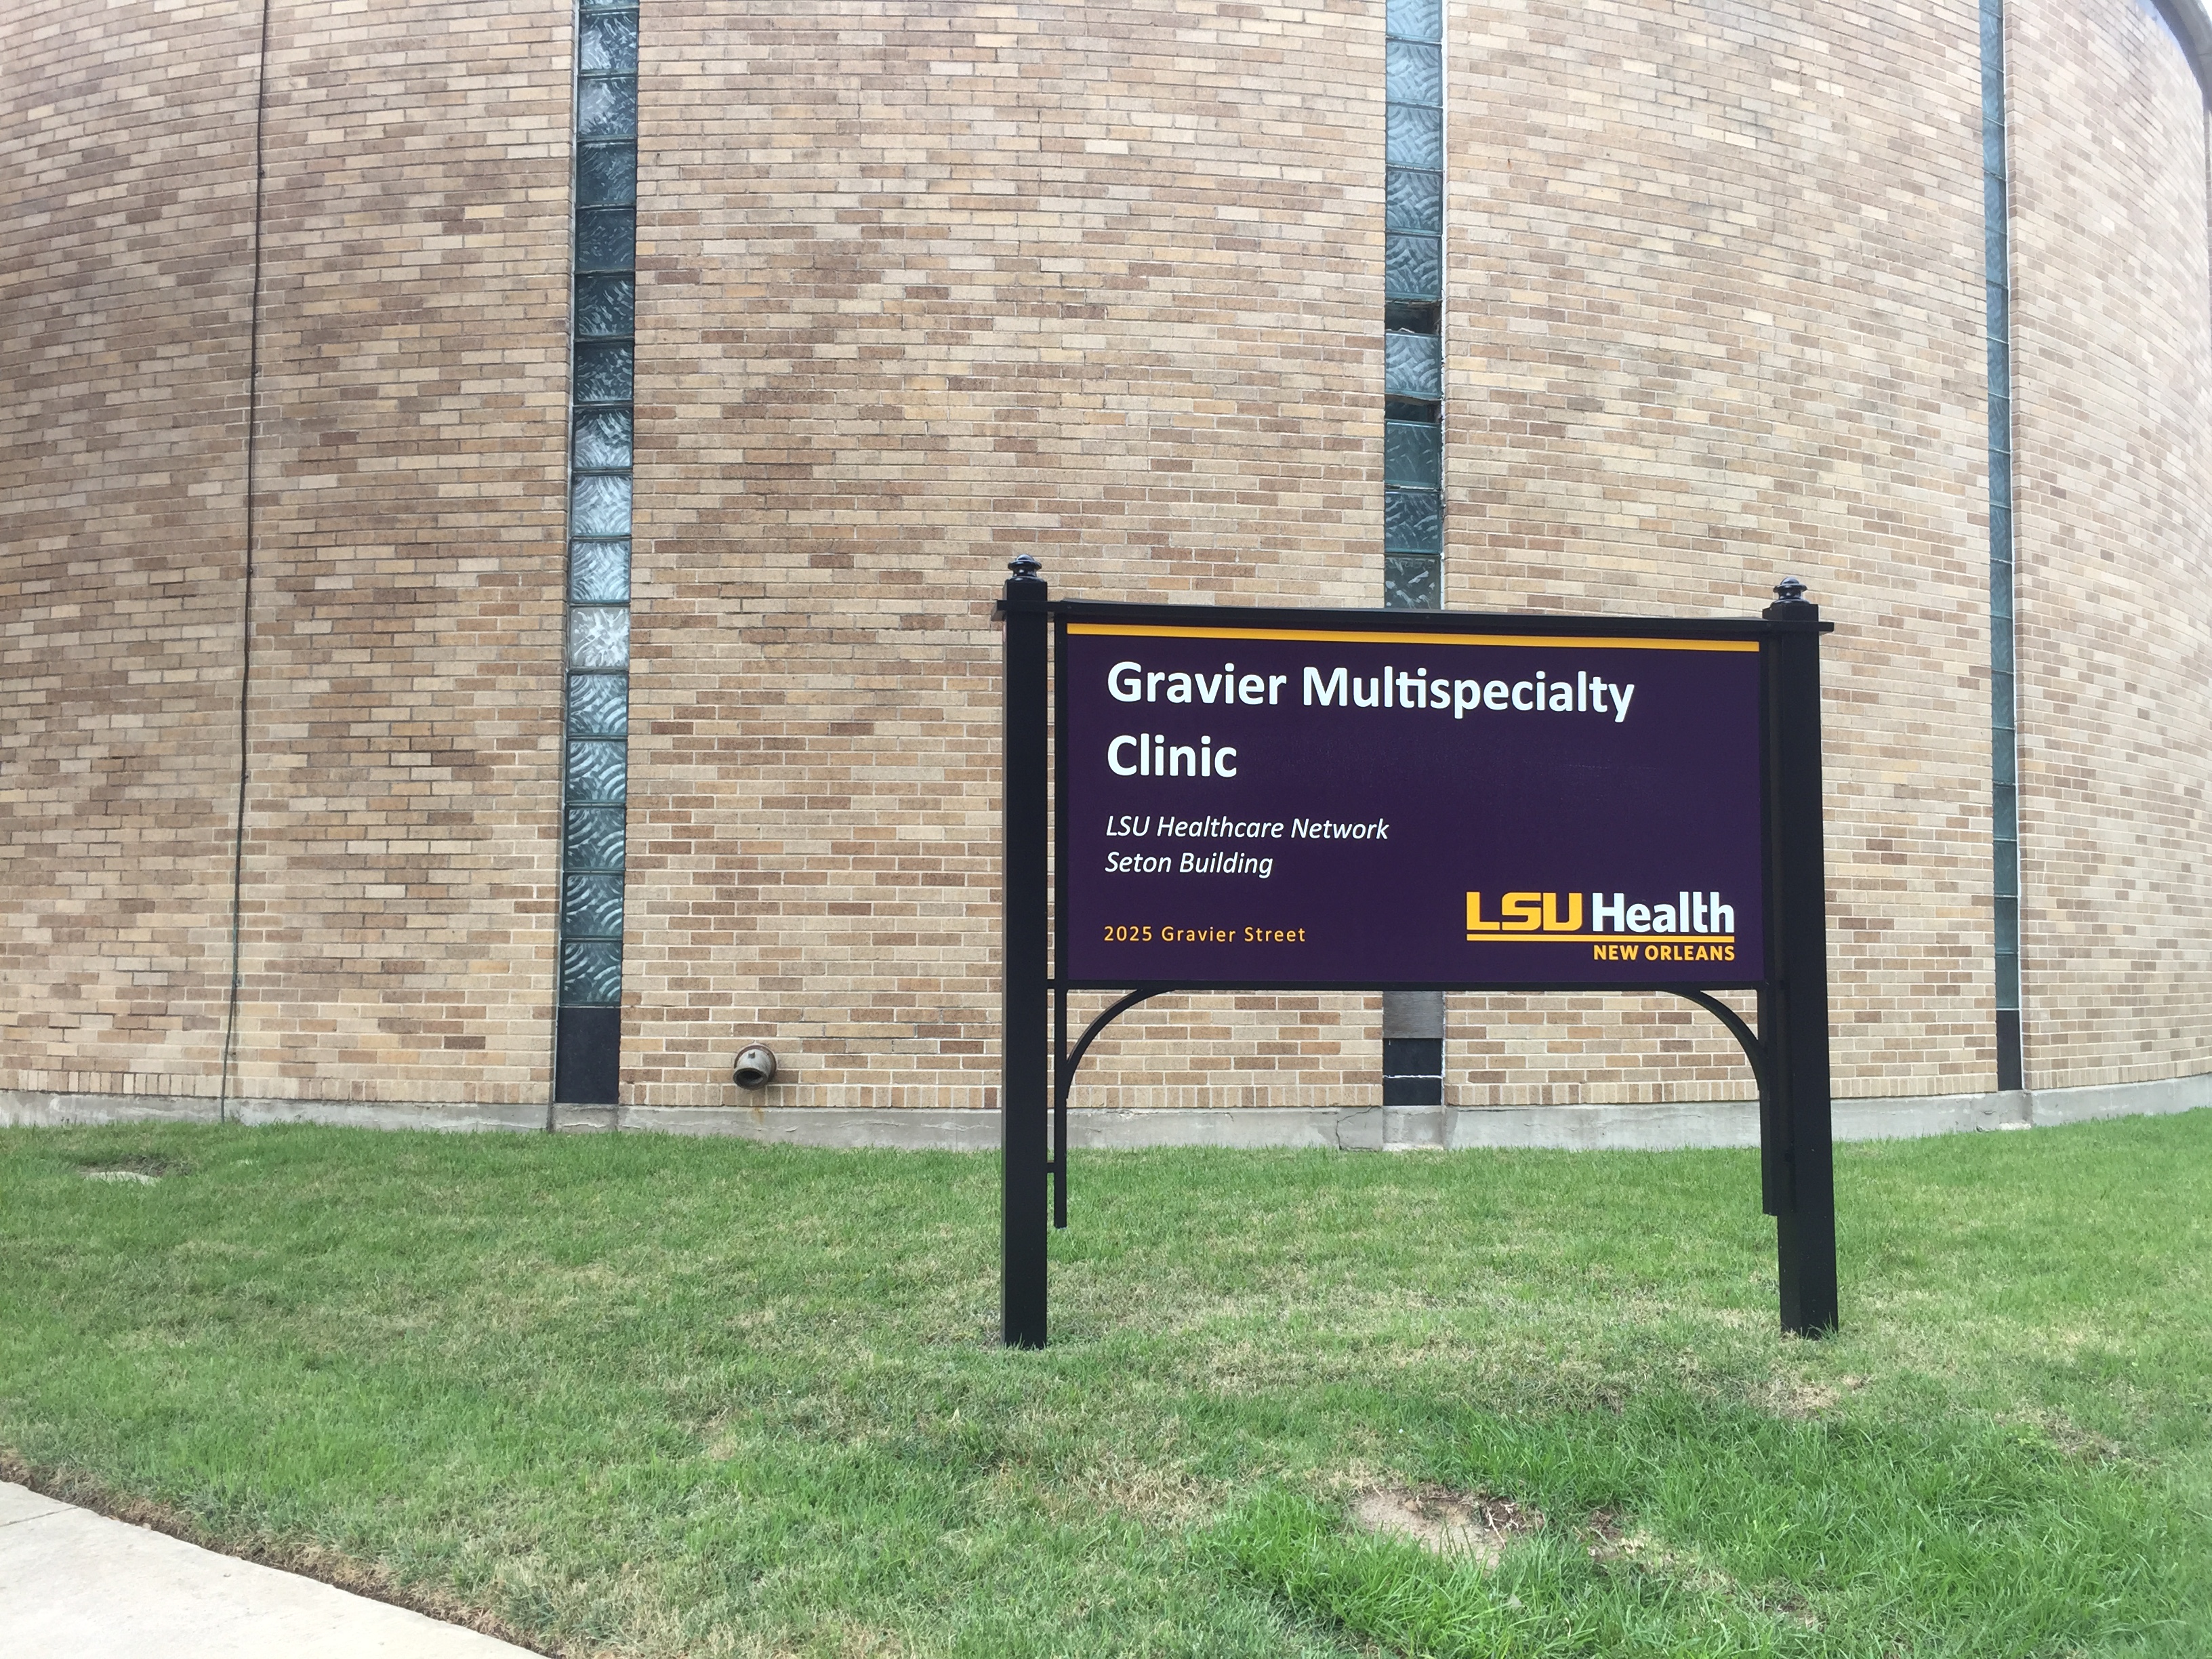 Gravier Multispecialty Clinic